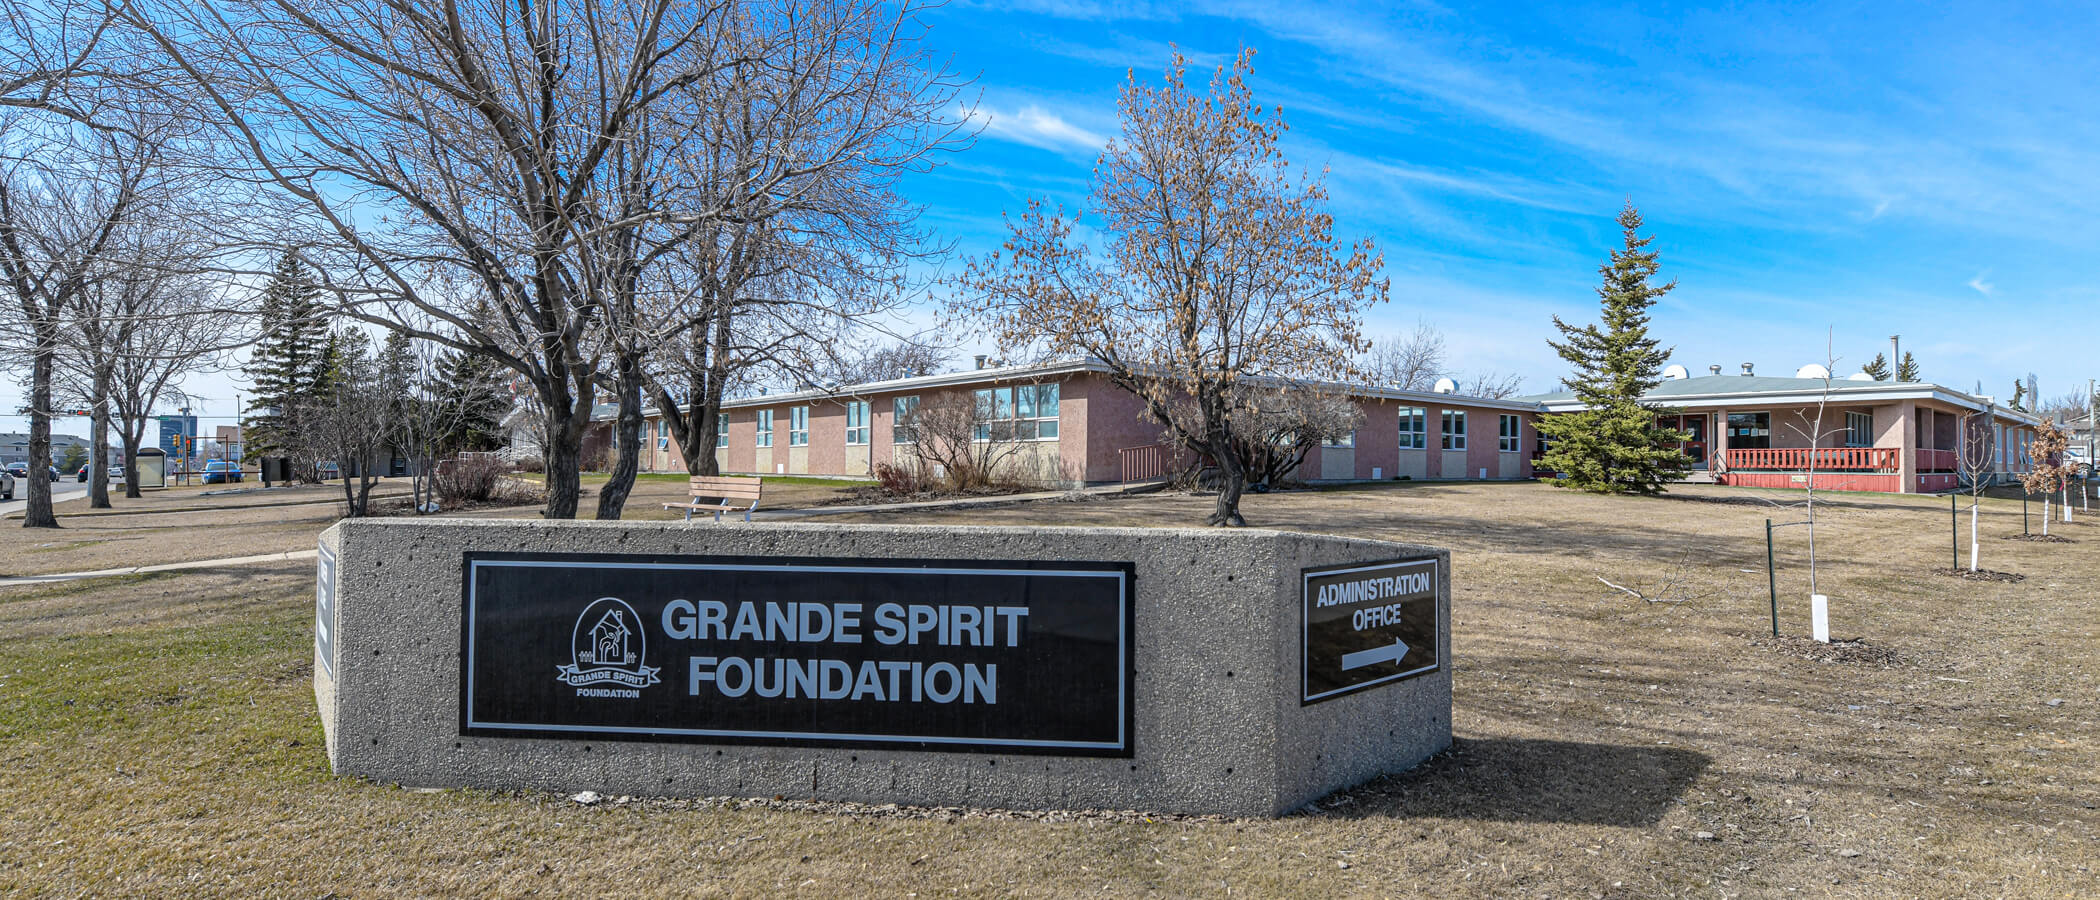 Senior Housing - The Grande Spirit Foundation